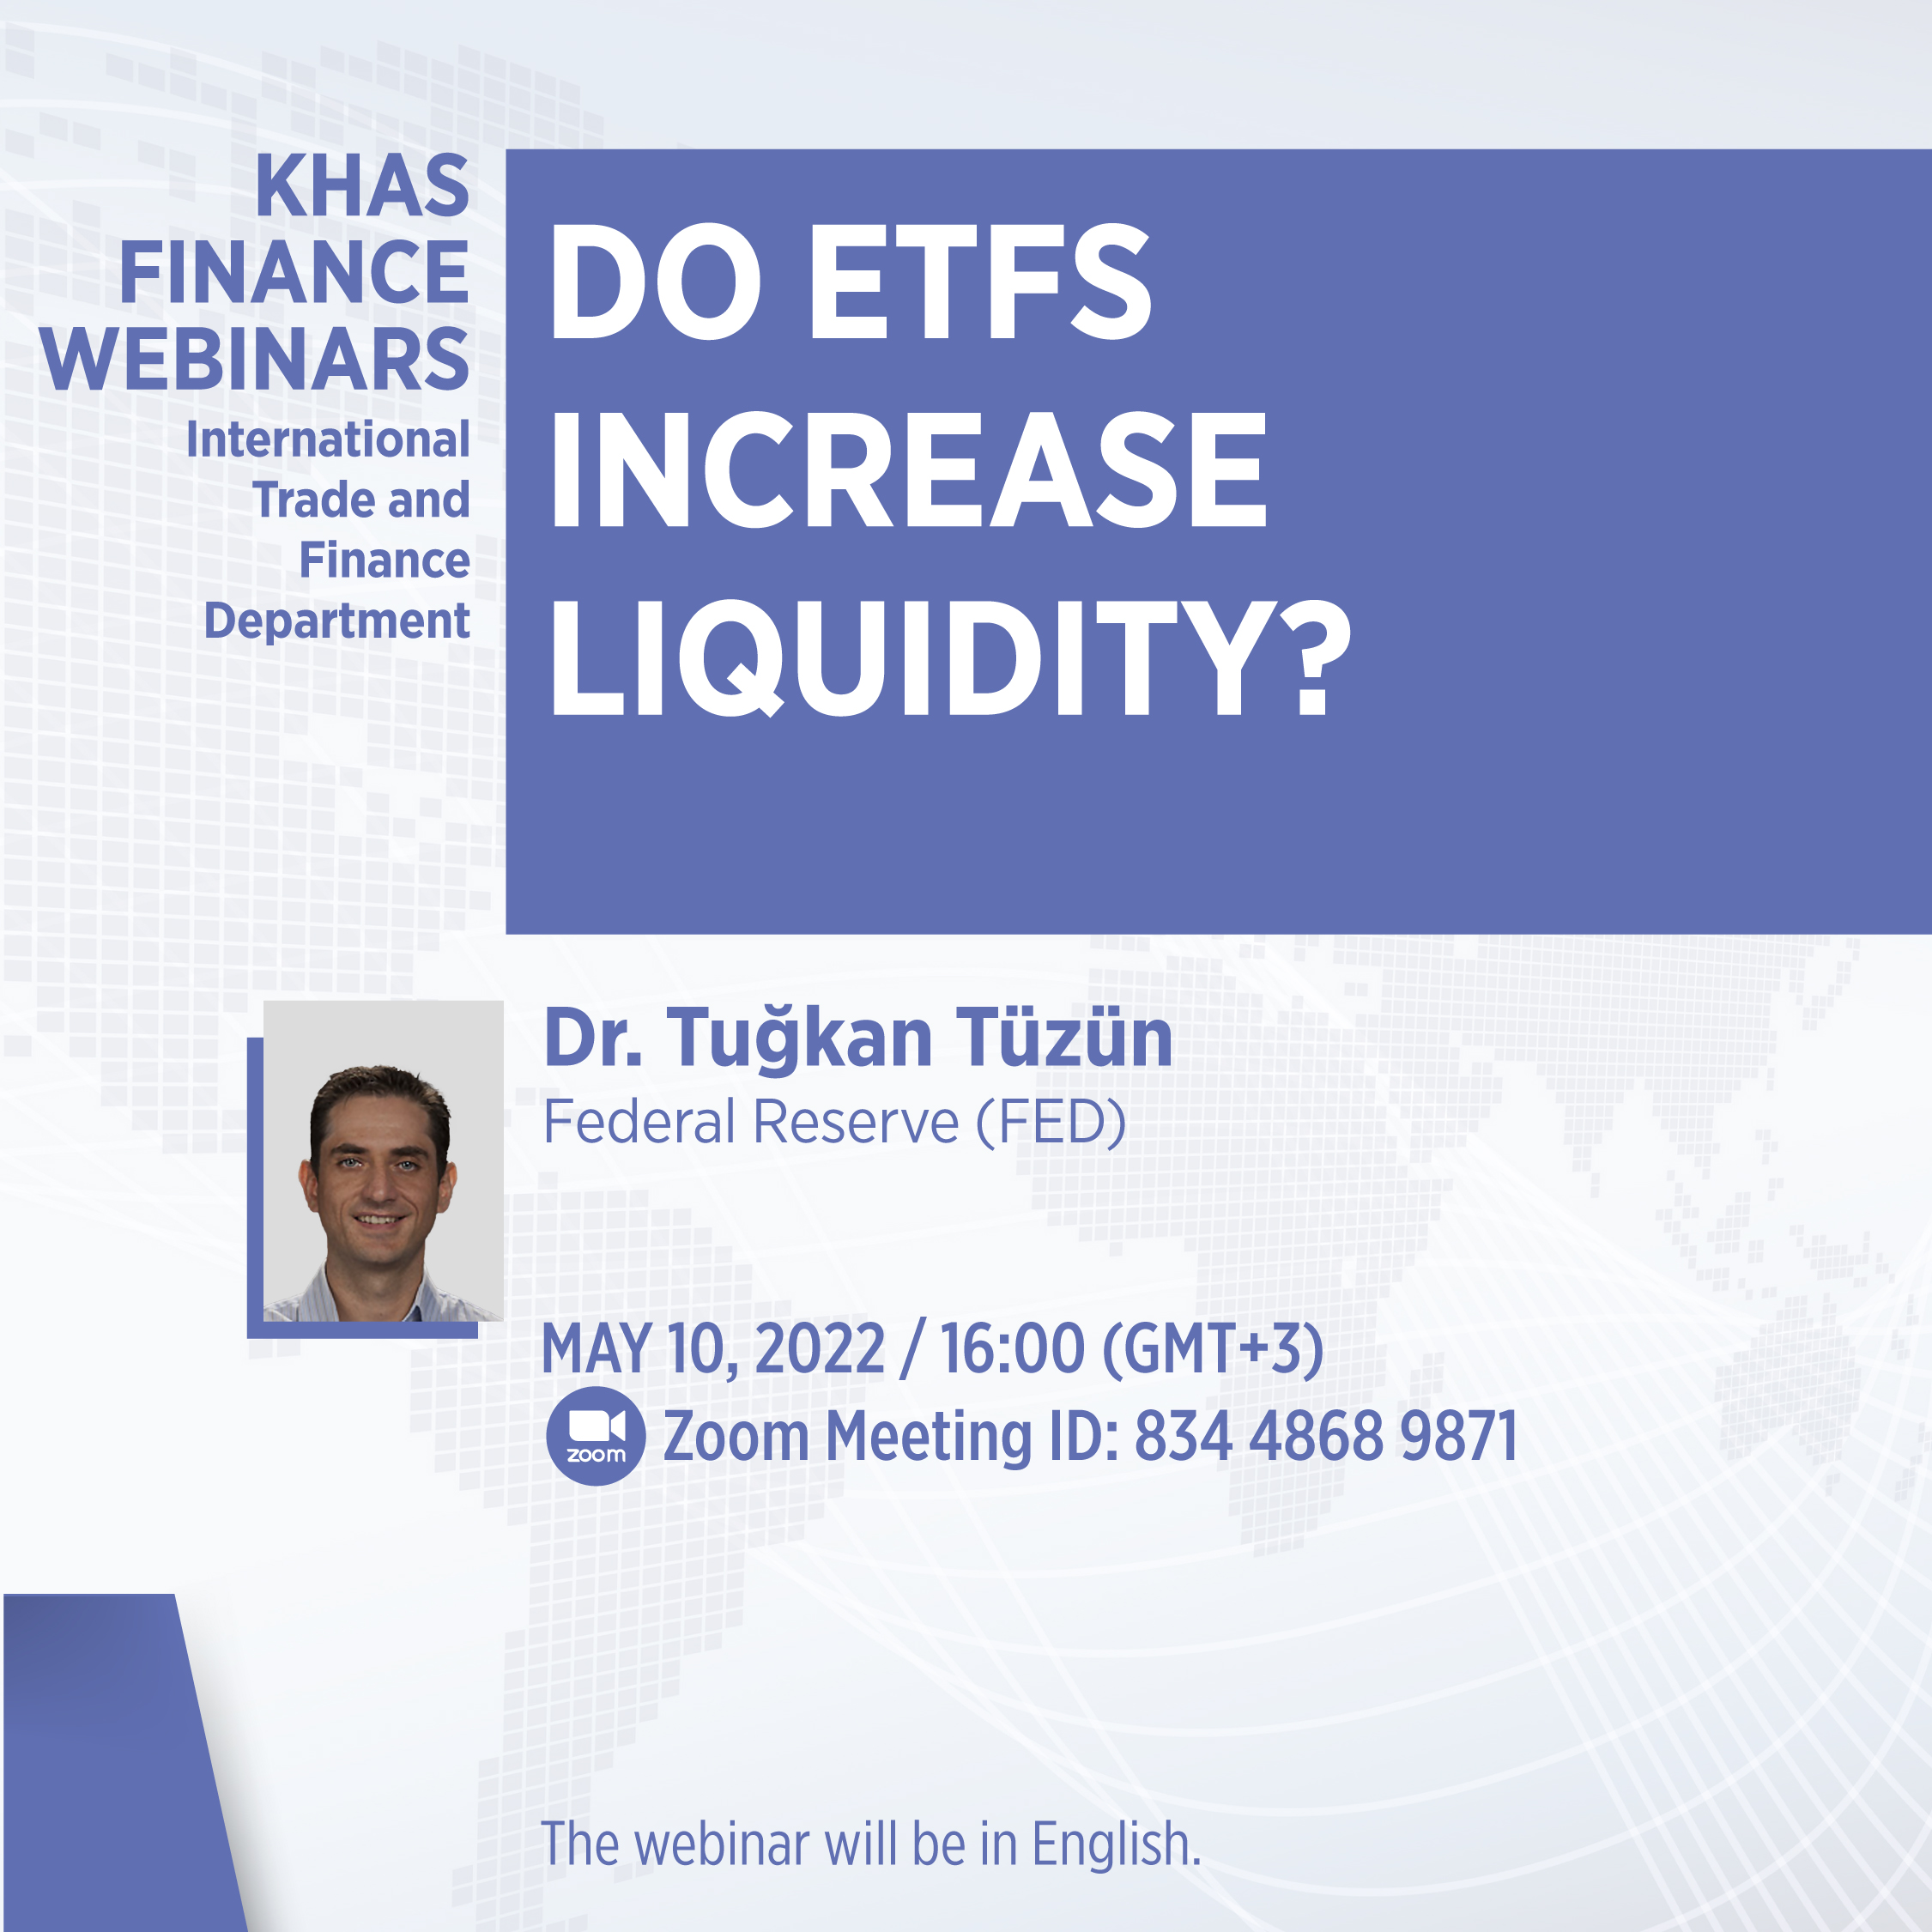 KHAS Finance Webinars - Dr. Tuğkan Tüzün